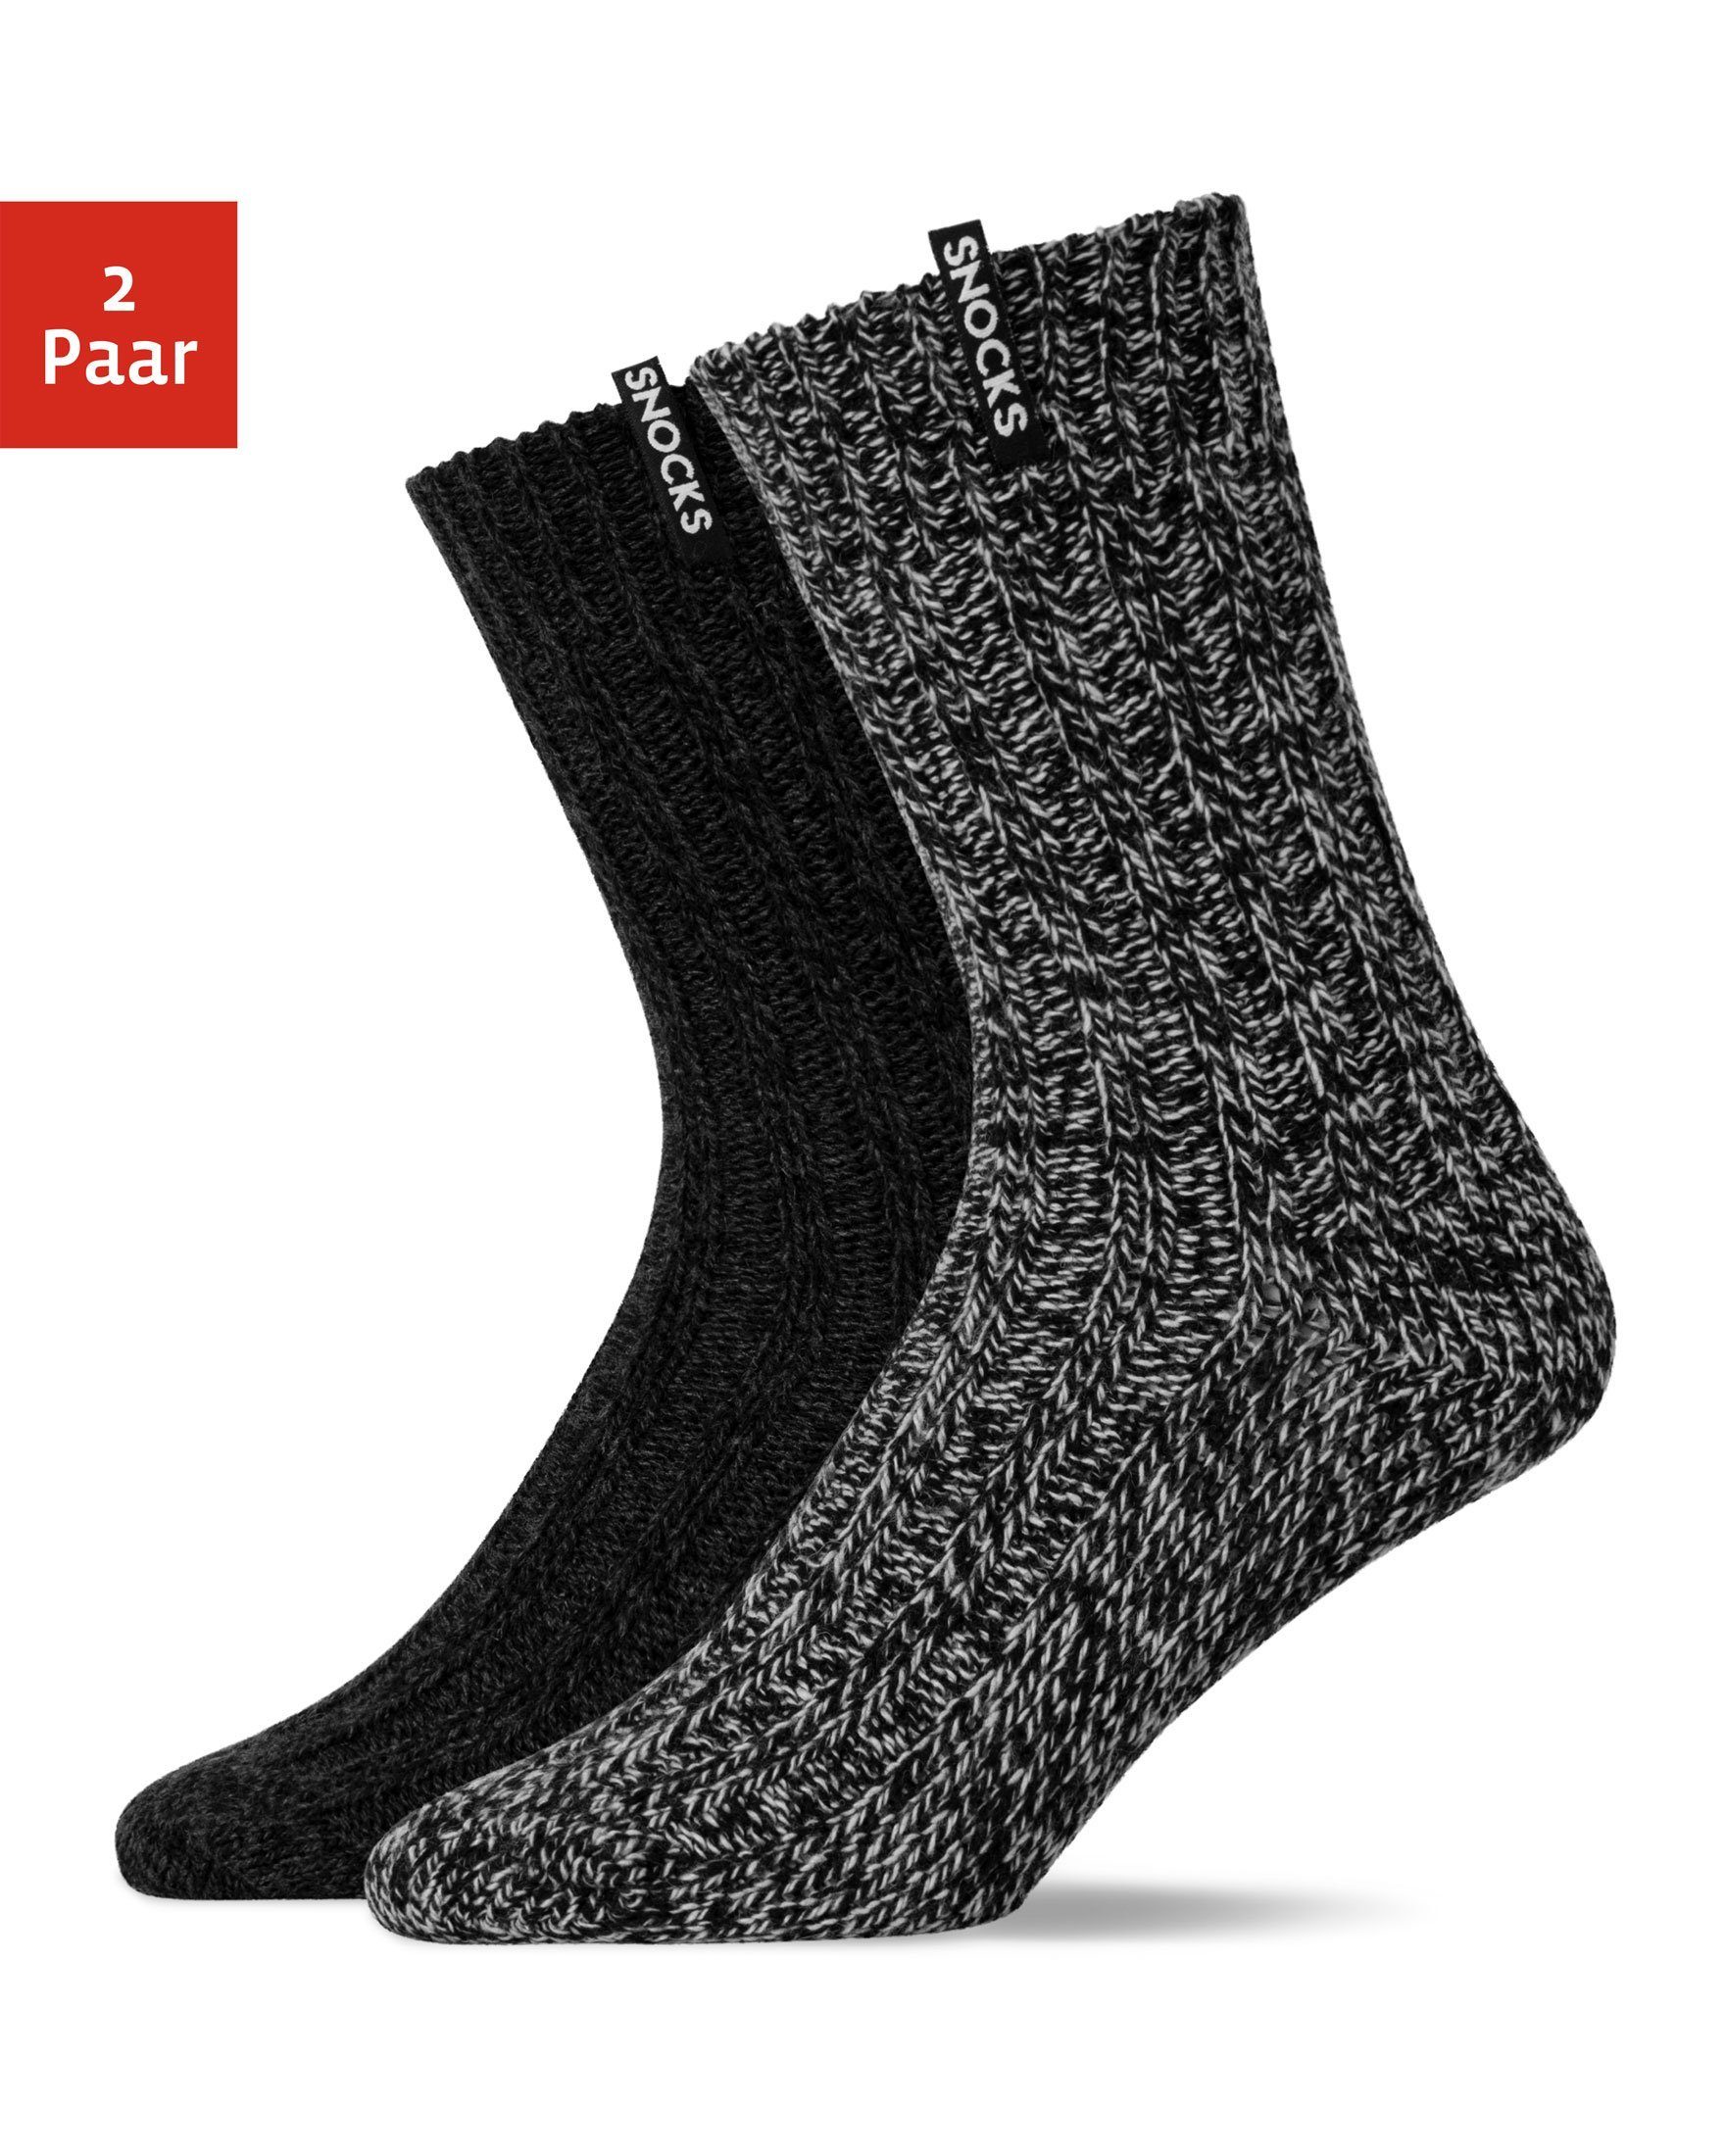 SNOCKS Norwegersocken »Norweger Socken Damen Herren Wintersocken« (2-Paar)  aus warmem Material mit Wollanteil online kaufen | OTTO